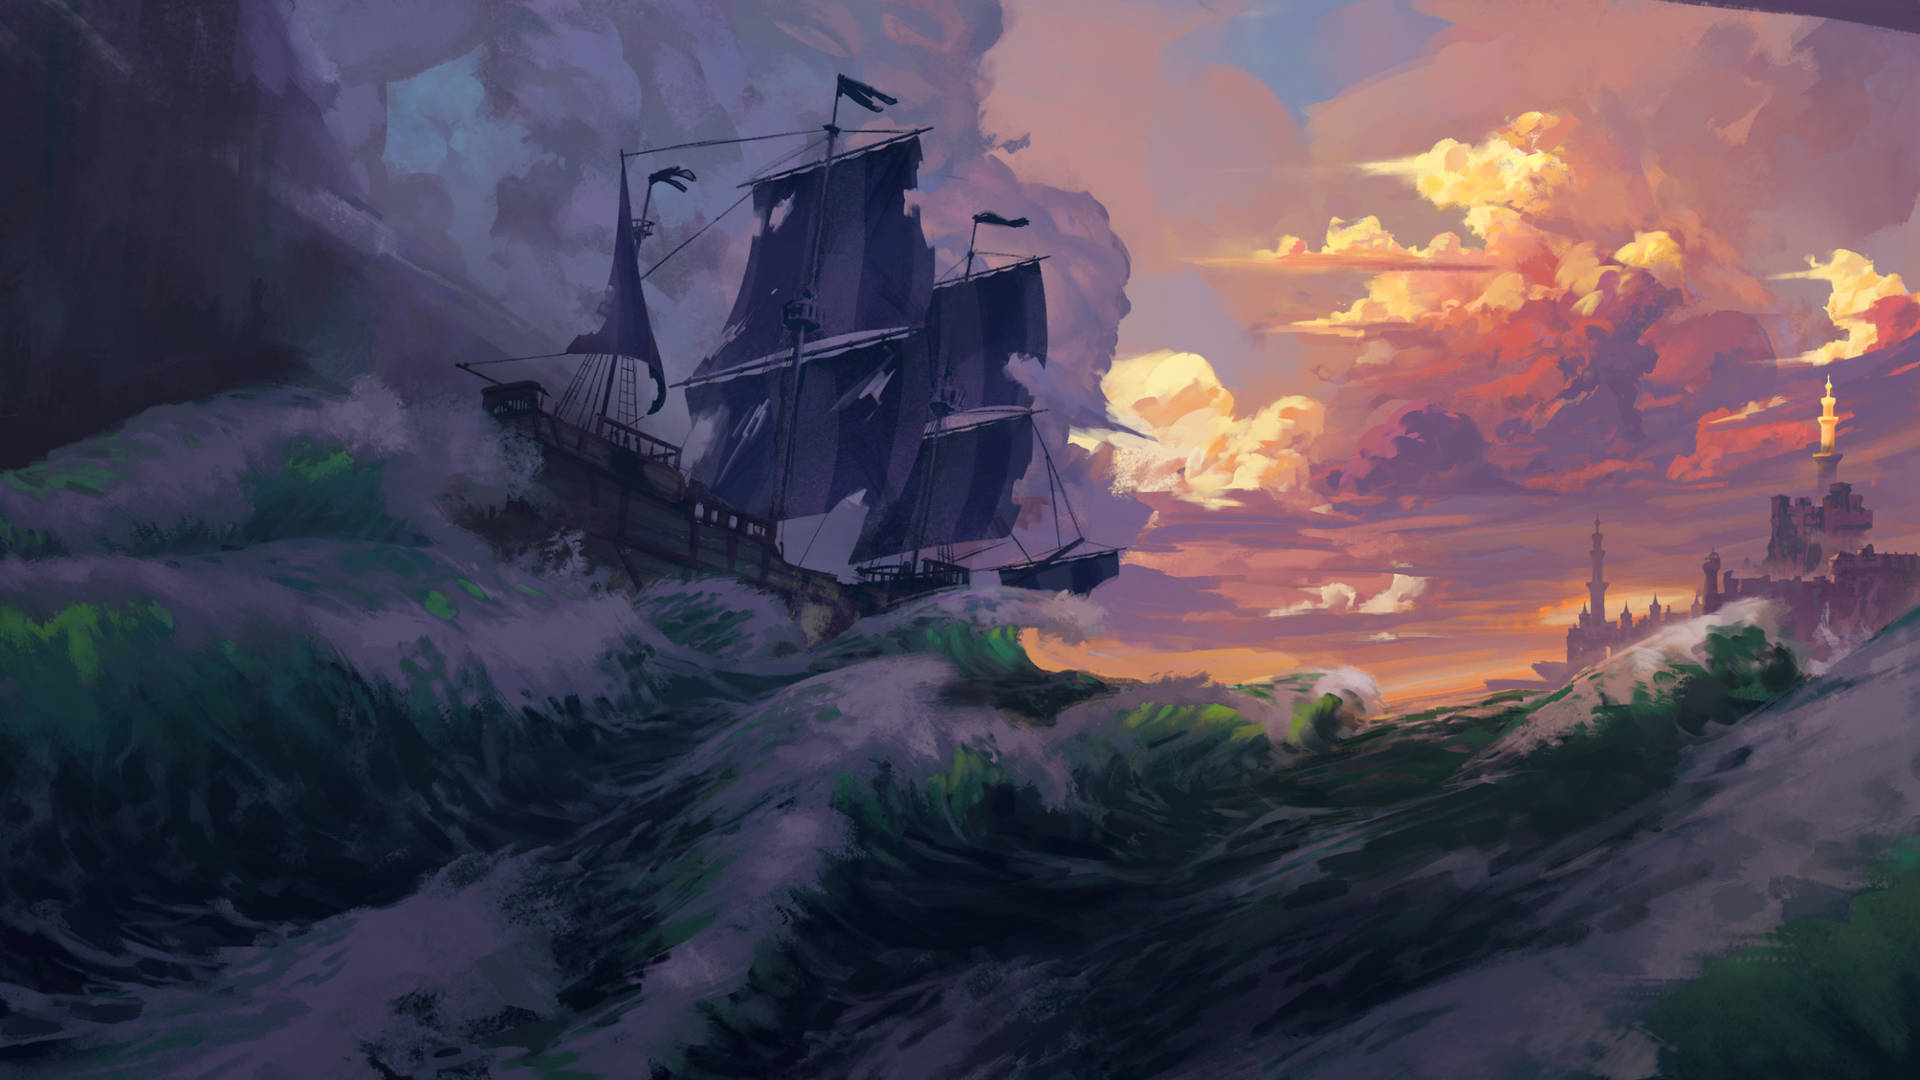 Pirate Ship Digital Art Wallpaper